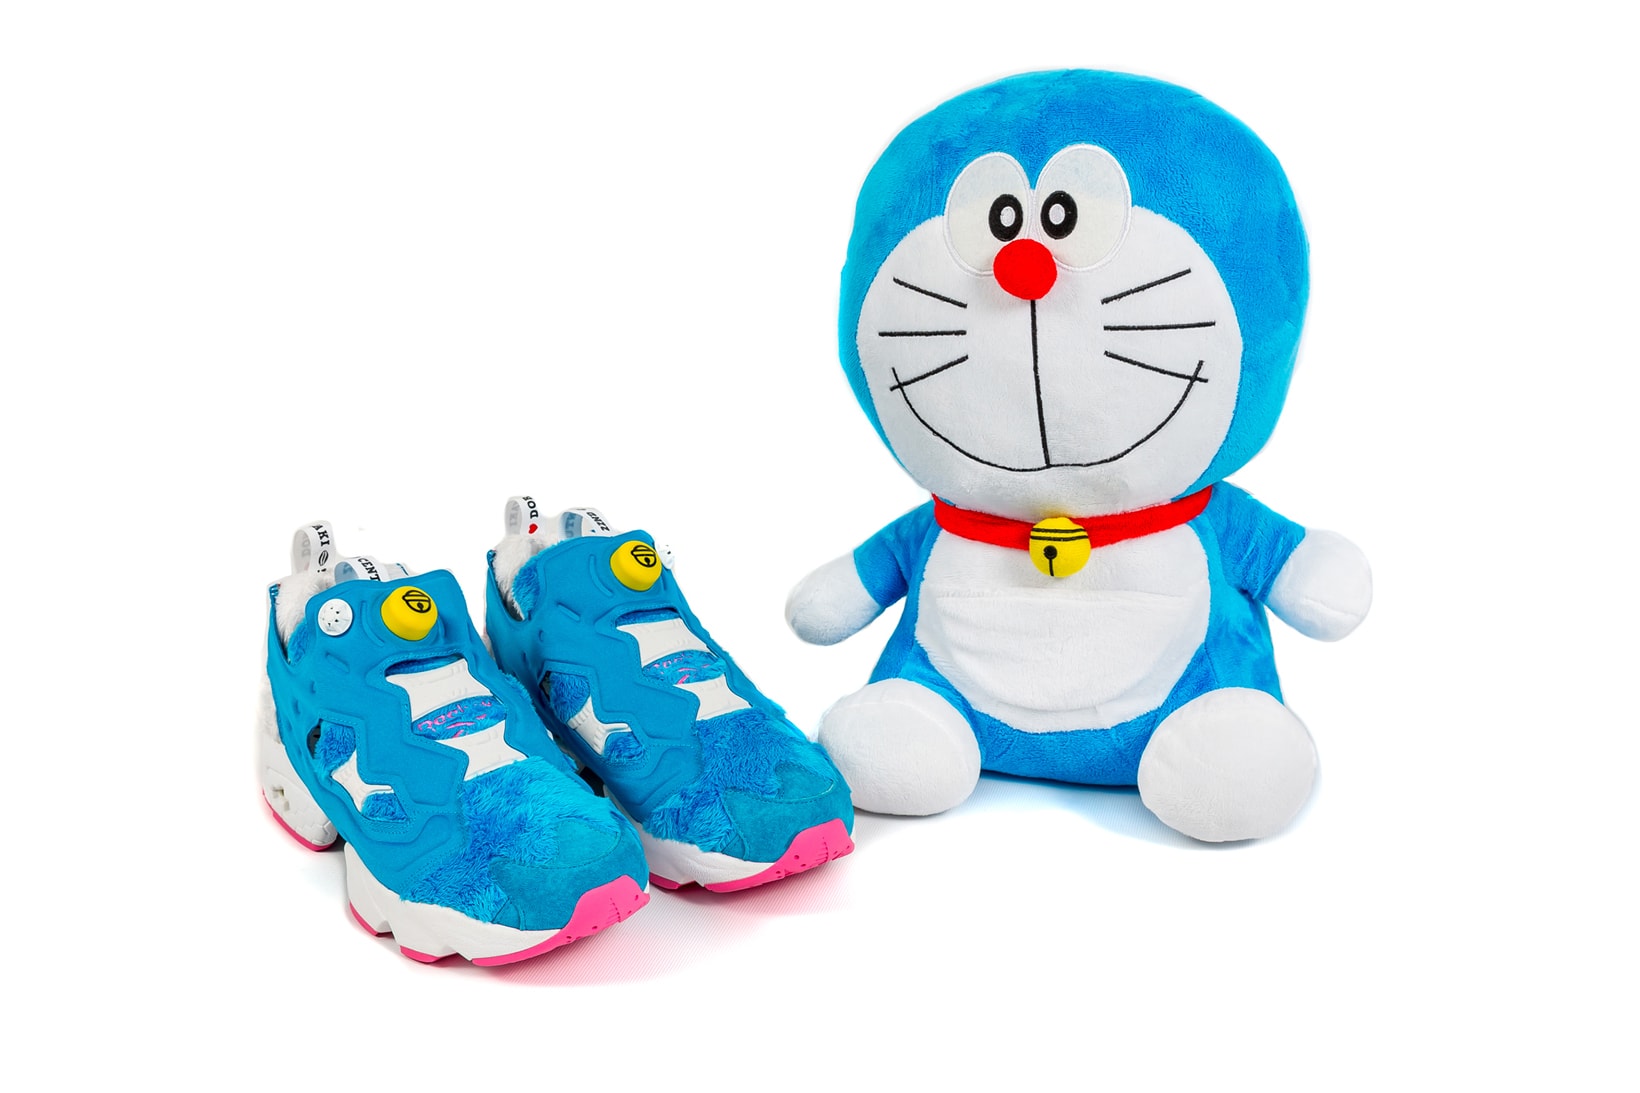 Packer Shoes atmos Reebok Instapump Fury Doraemon